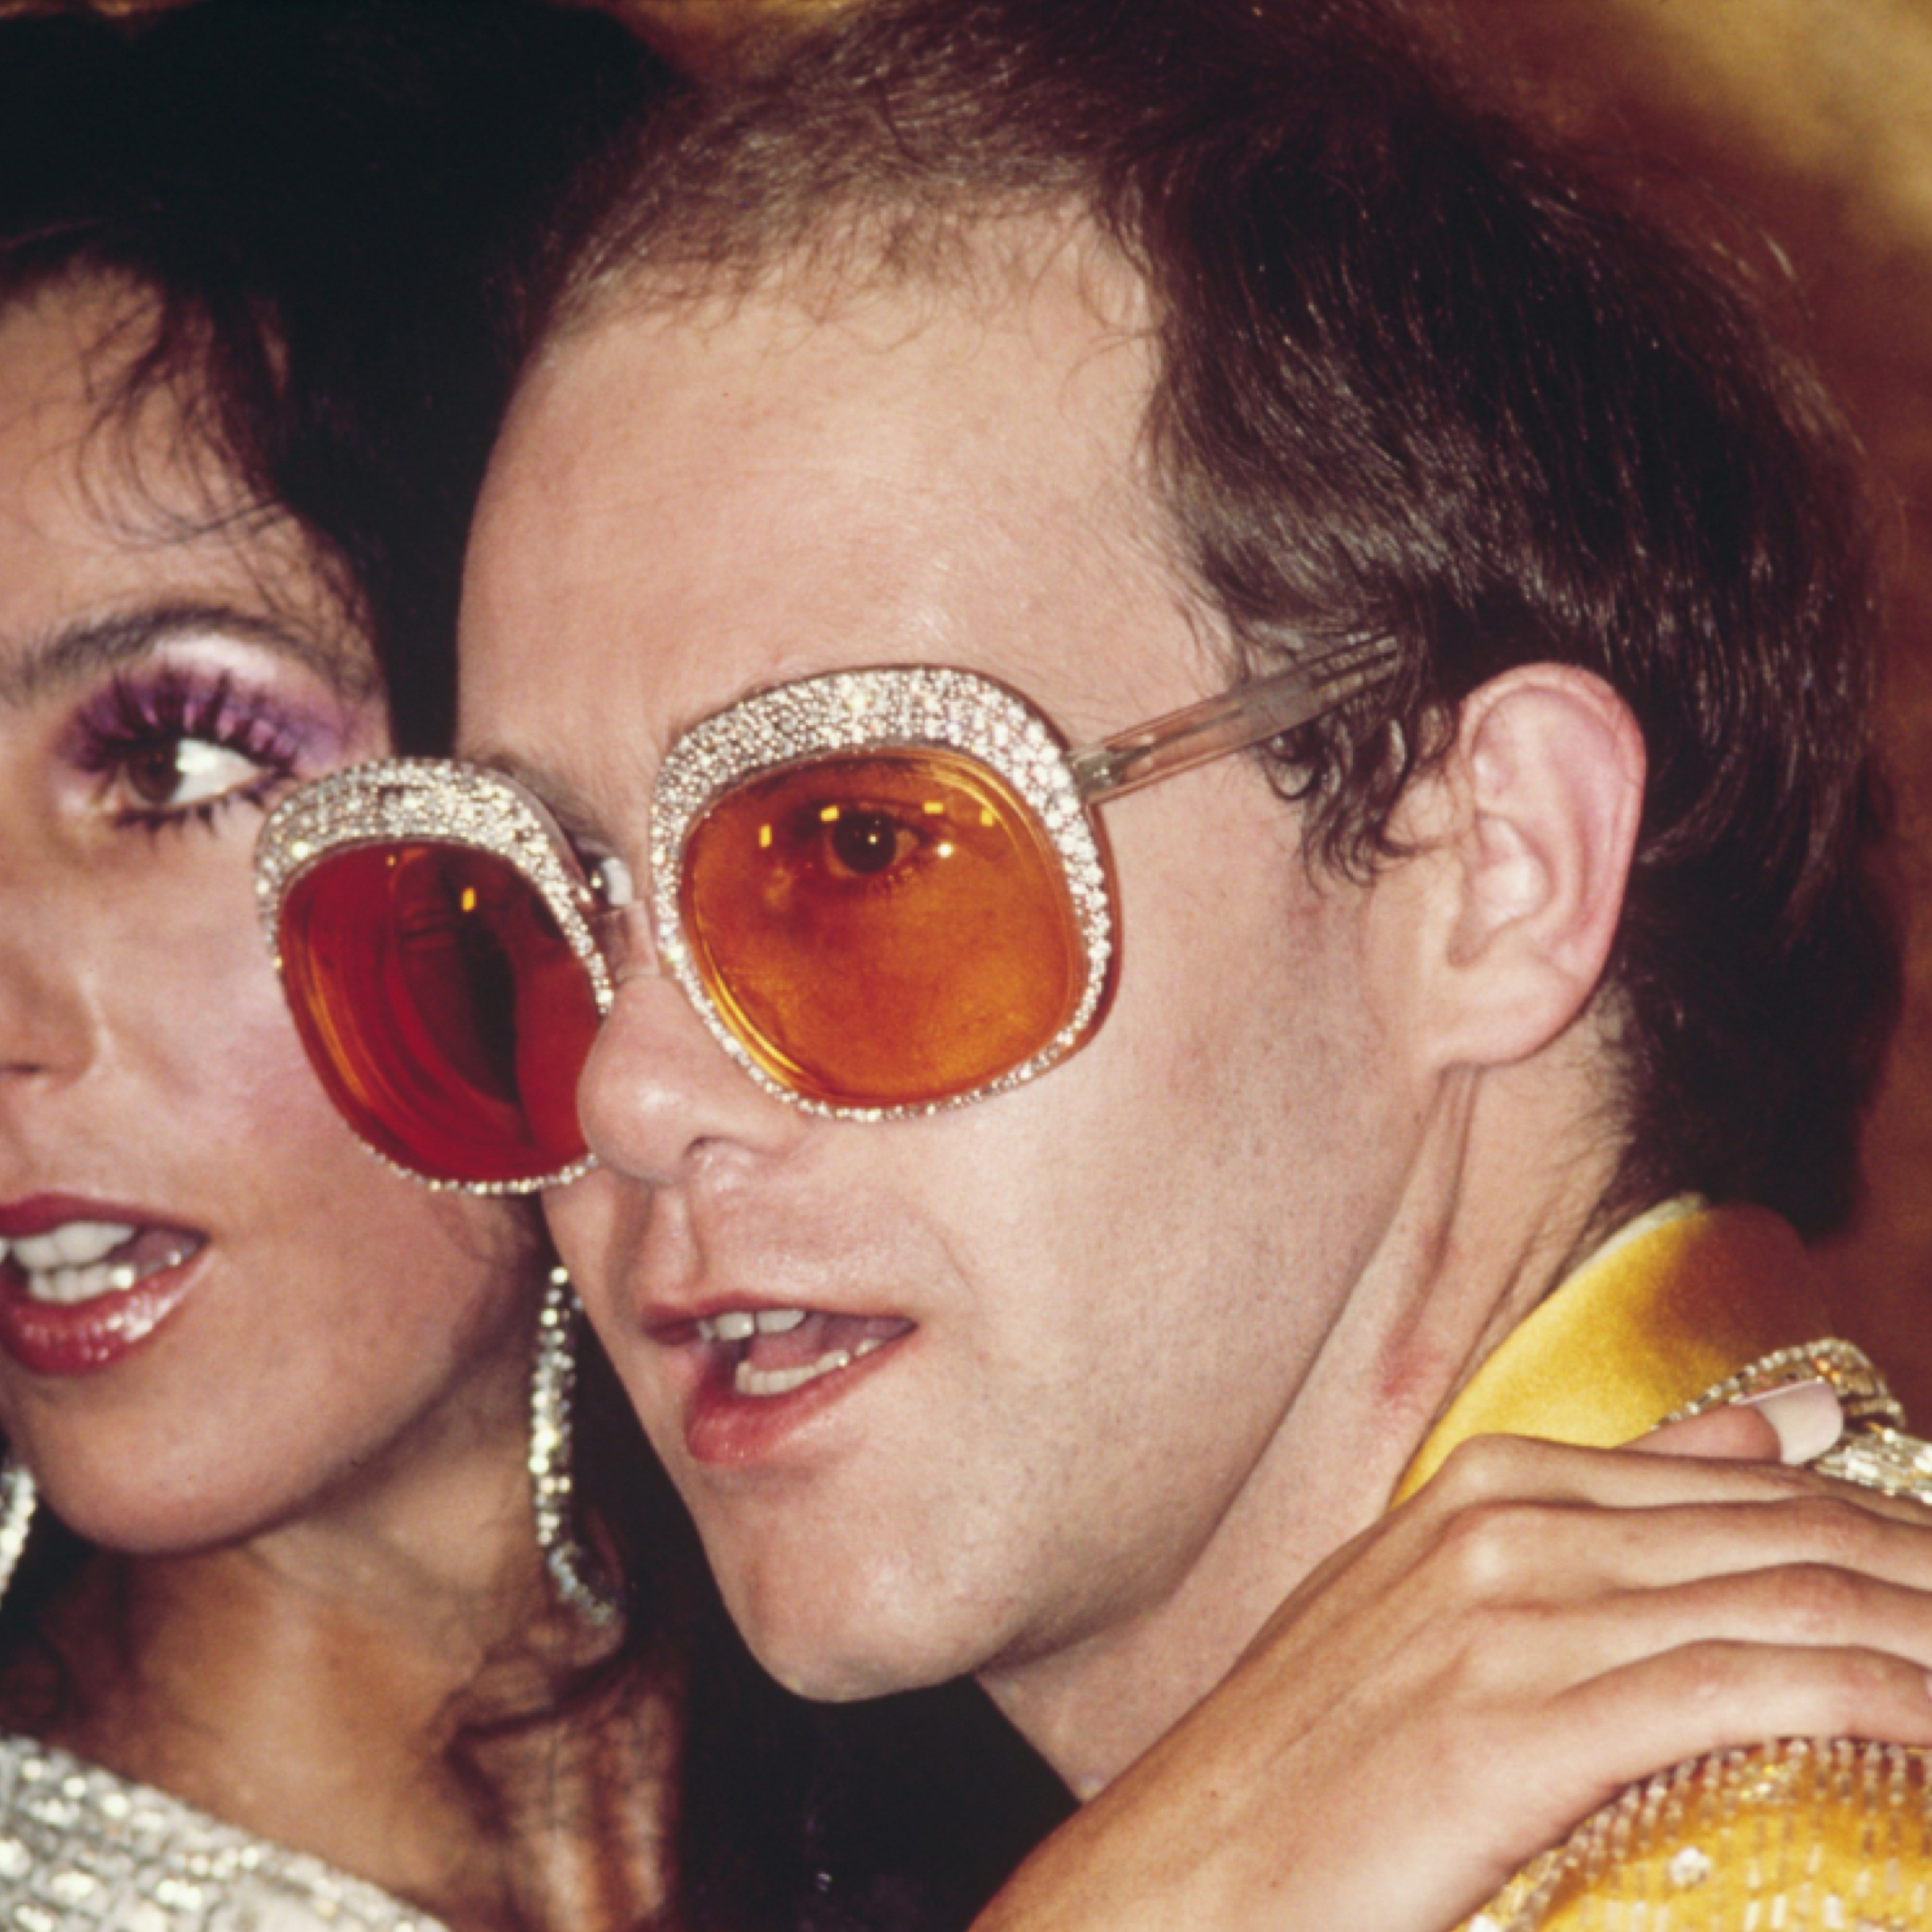 Take some Style inspiration from Elton John sunglasses!